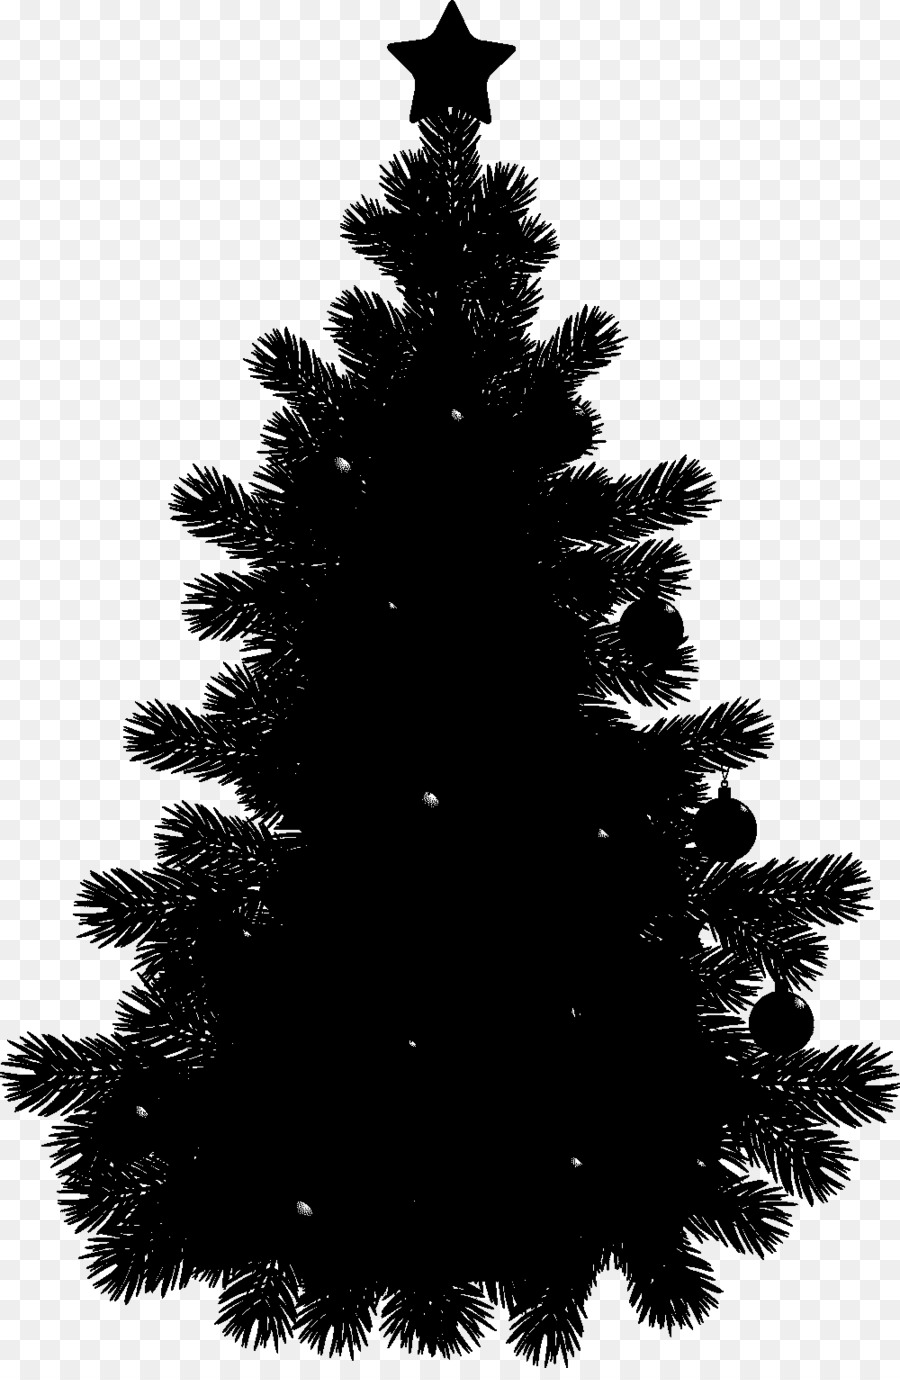 Clip art +Black Pine Tree Openclipart +Black Pine Tree -  png download - 1000*1520 - Free Transparent Pine png Download.